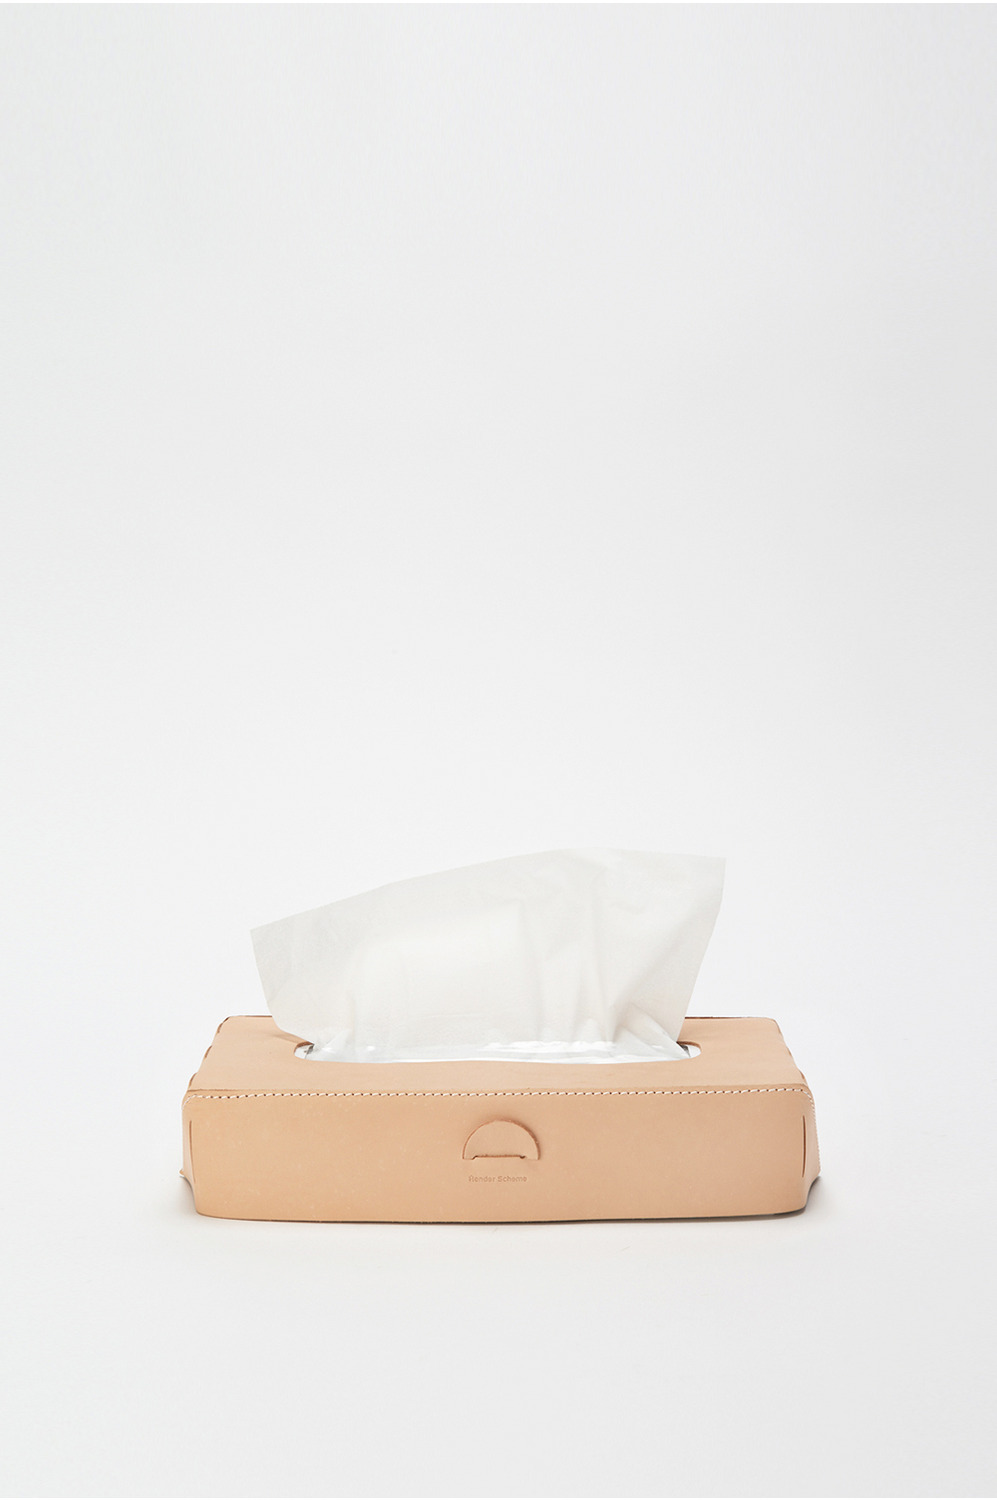 tissue box case 詳細画像 natural 1